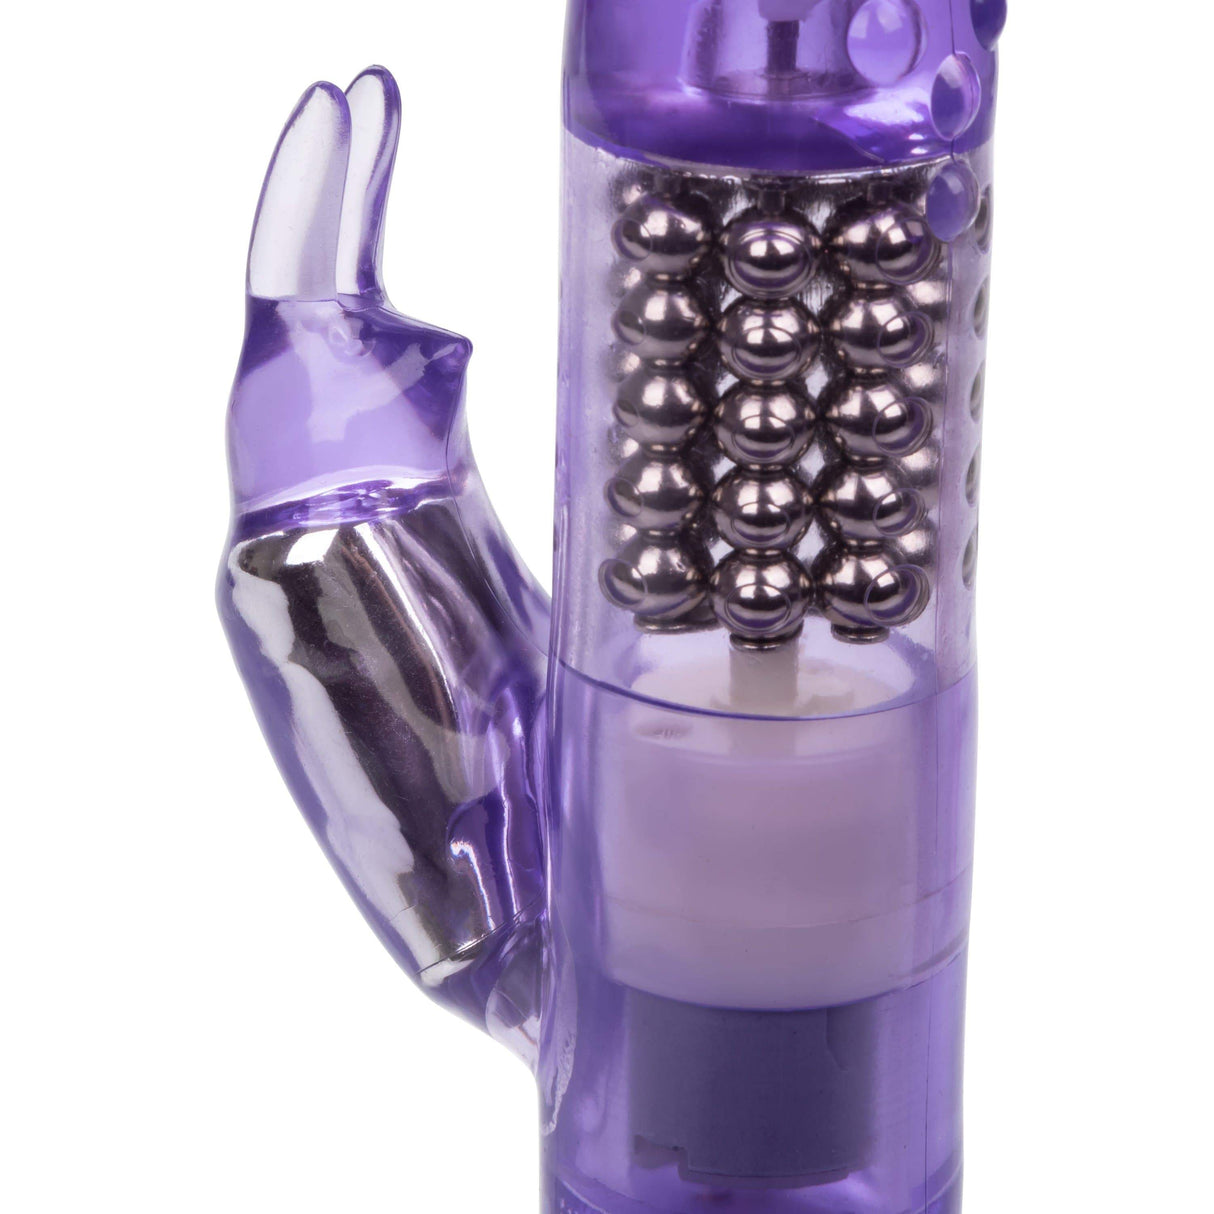 California Exotics - Jack Rabbit Waterproof 5 Rows Jack Rabbit Vibrator (Purple) CE1785 CherryAffairs